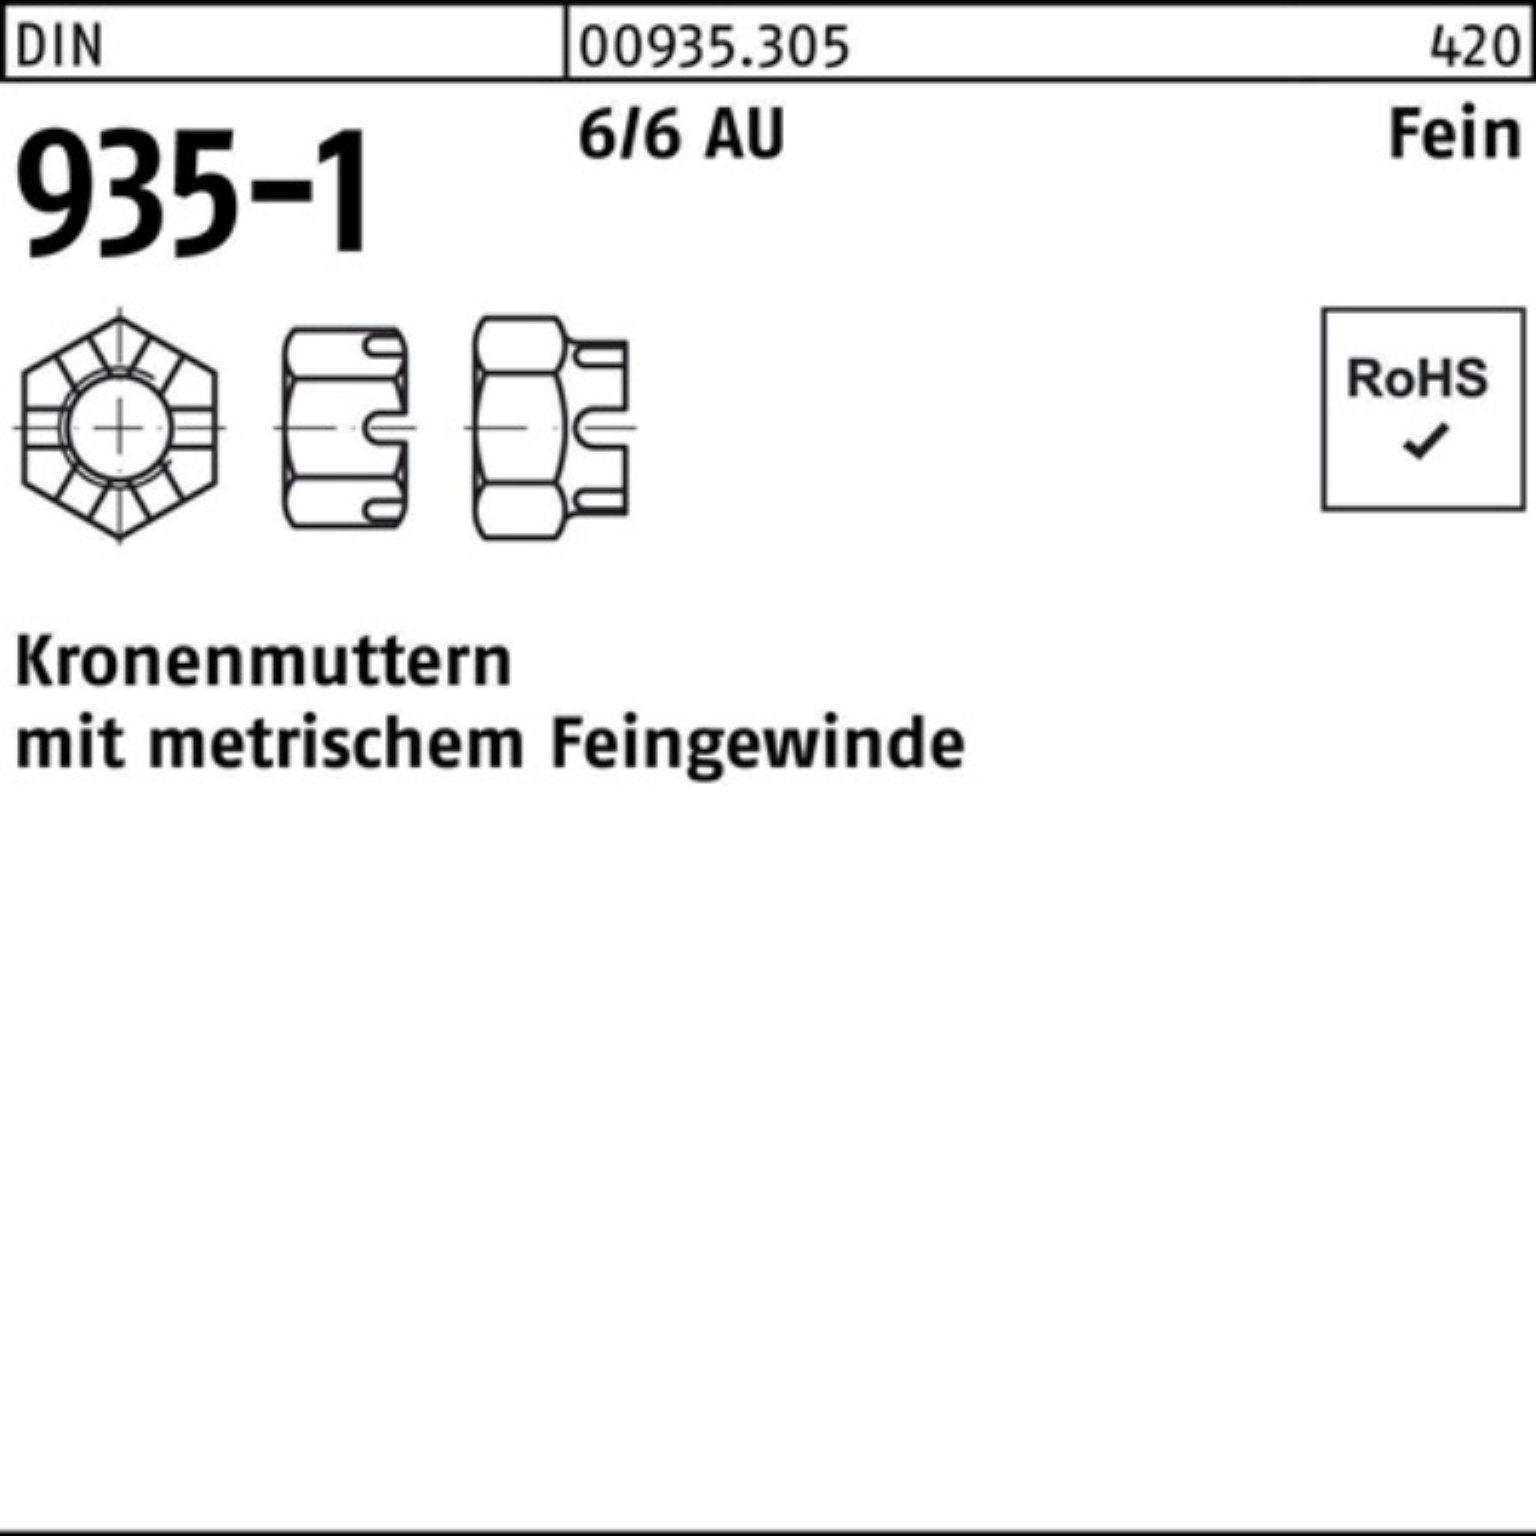 Stück Reyher M80x Kronenmutter K 1 6 Pack 935-1 DIN 100er 6 Fein Kronenmutter DIN 935-1 4